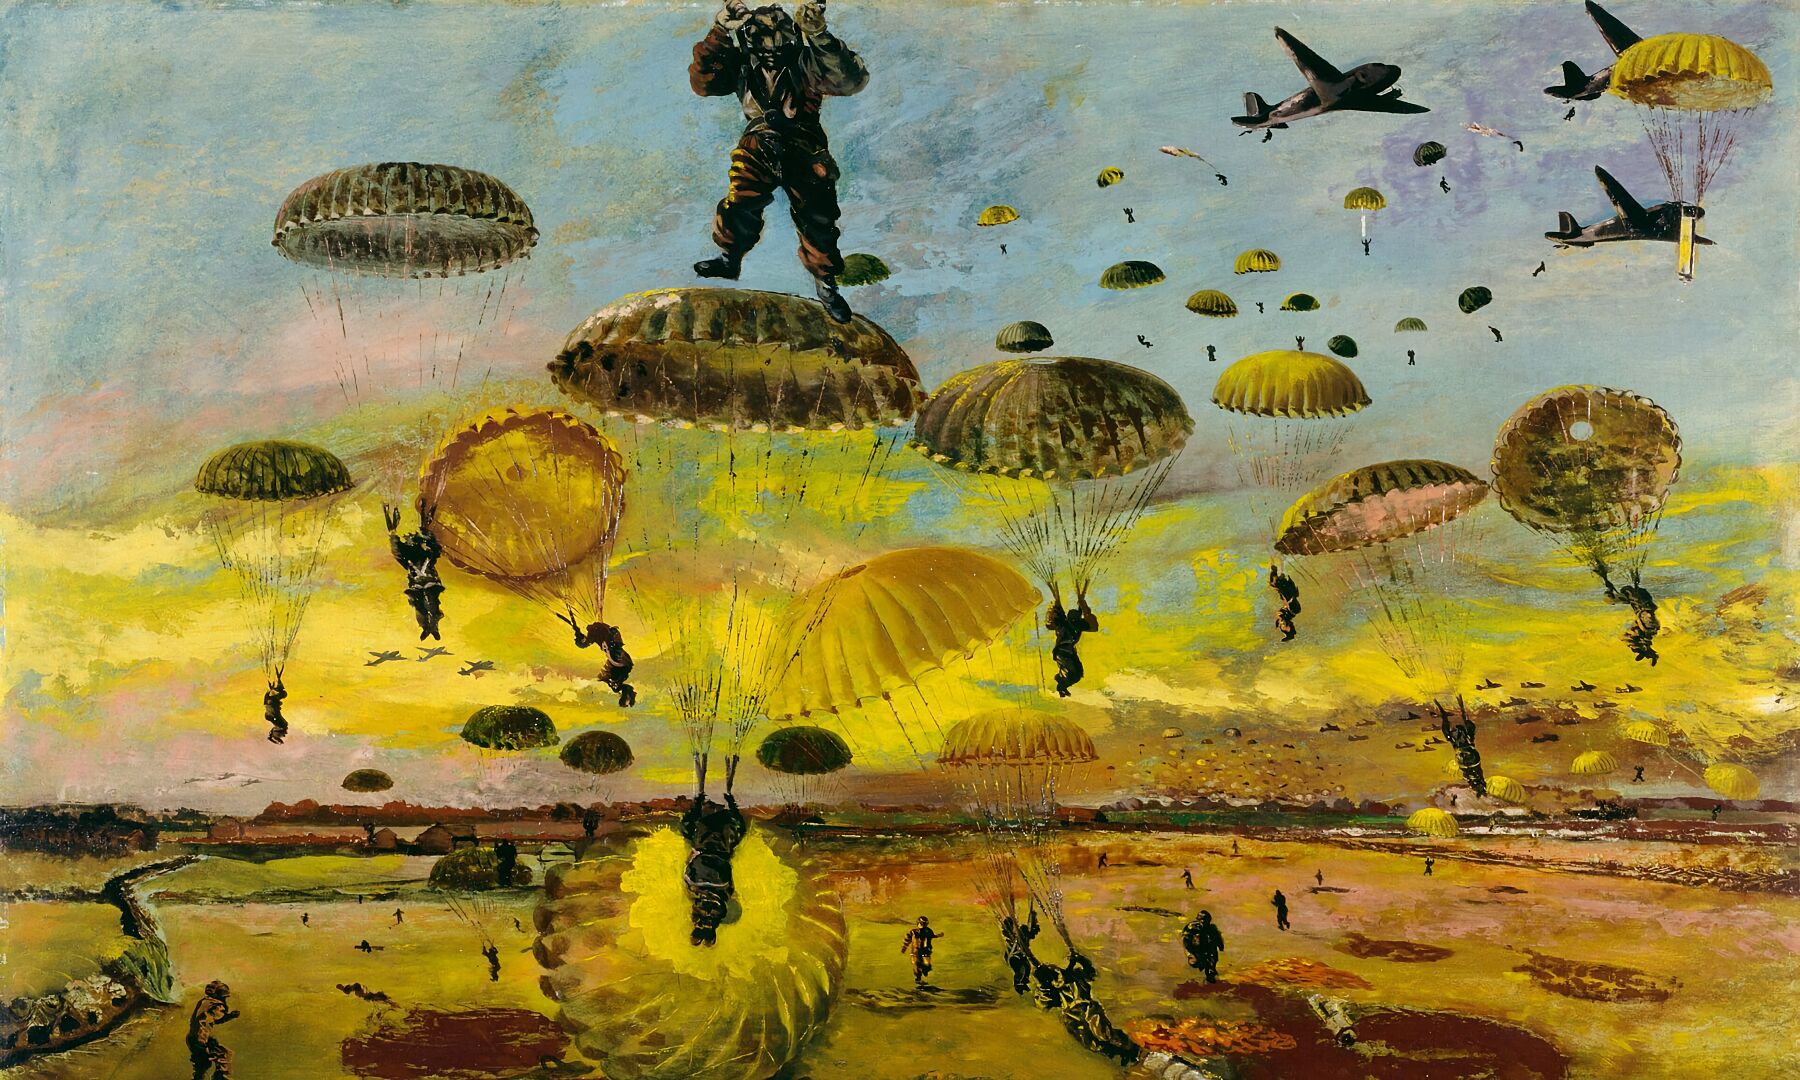 The Drop by Albert Richards - 1944